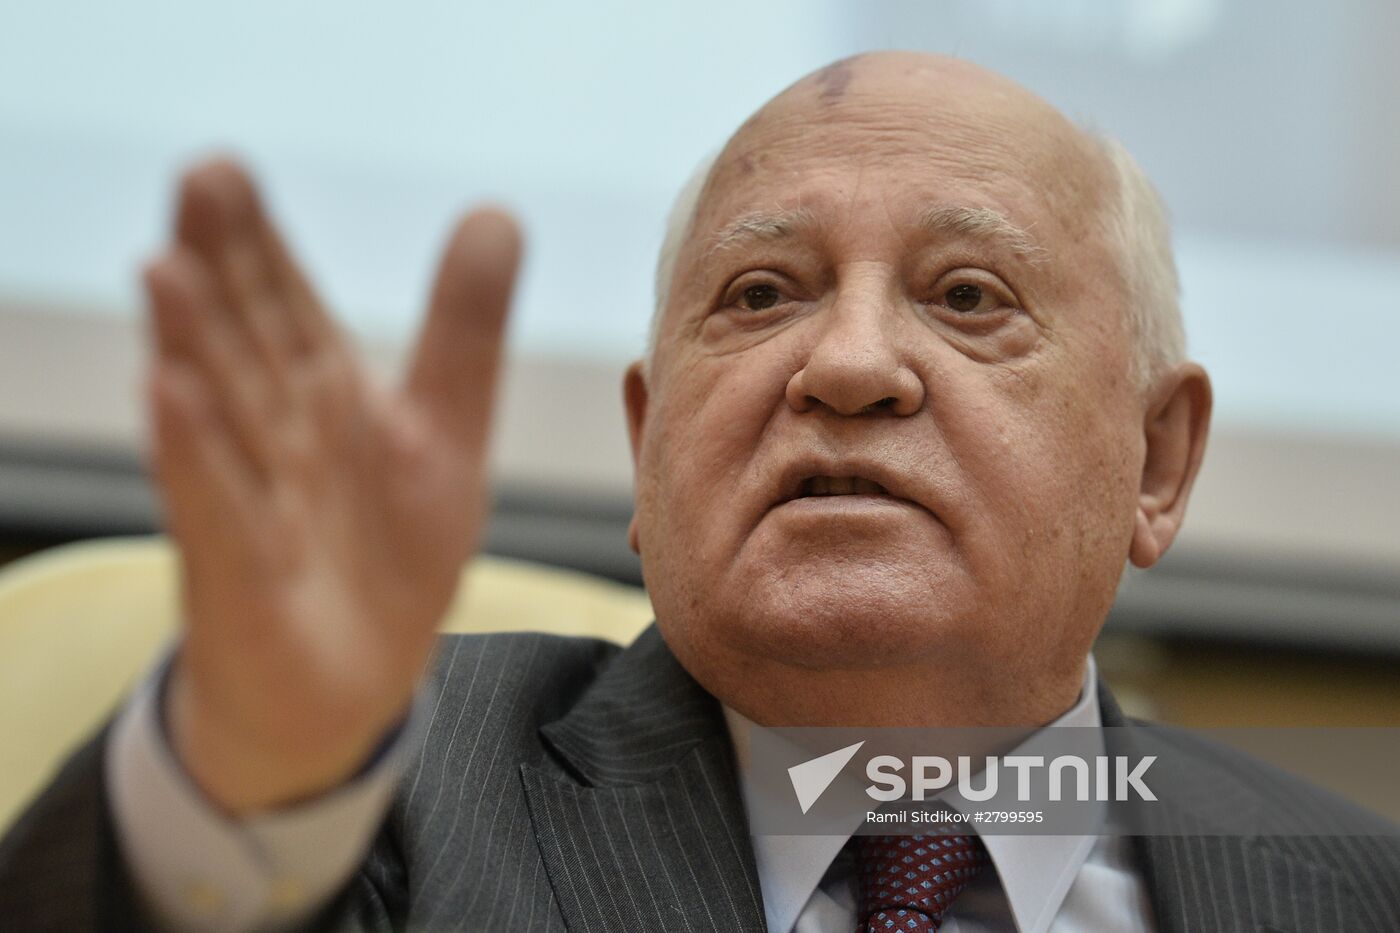 Presentation of "Gorbachev in Life" book